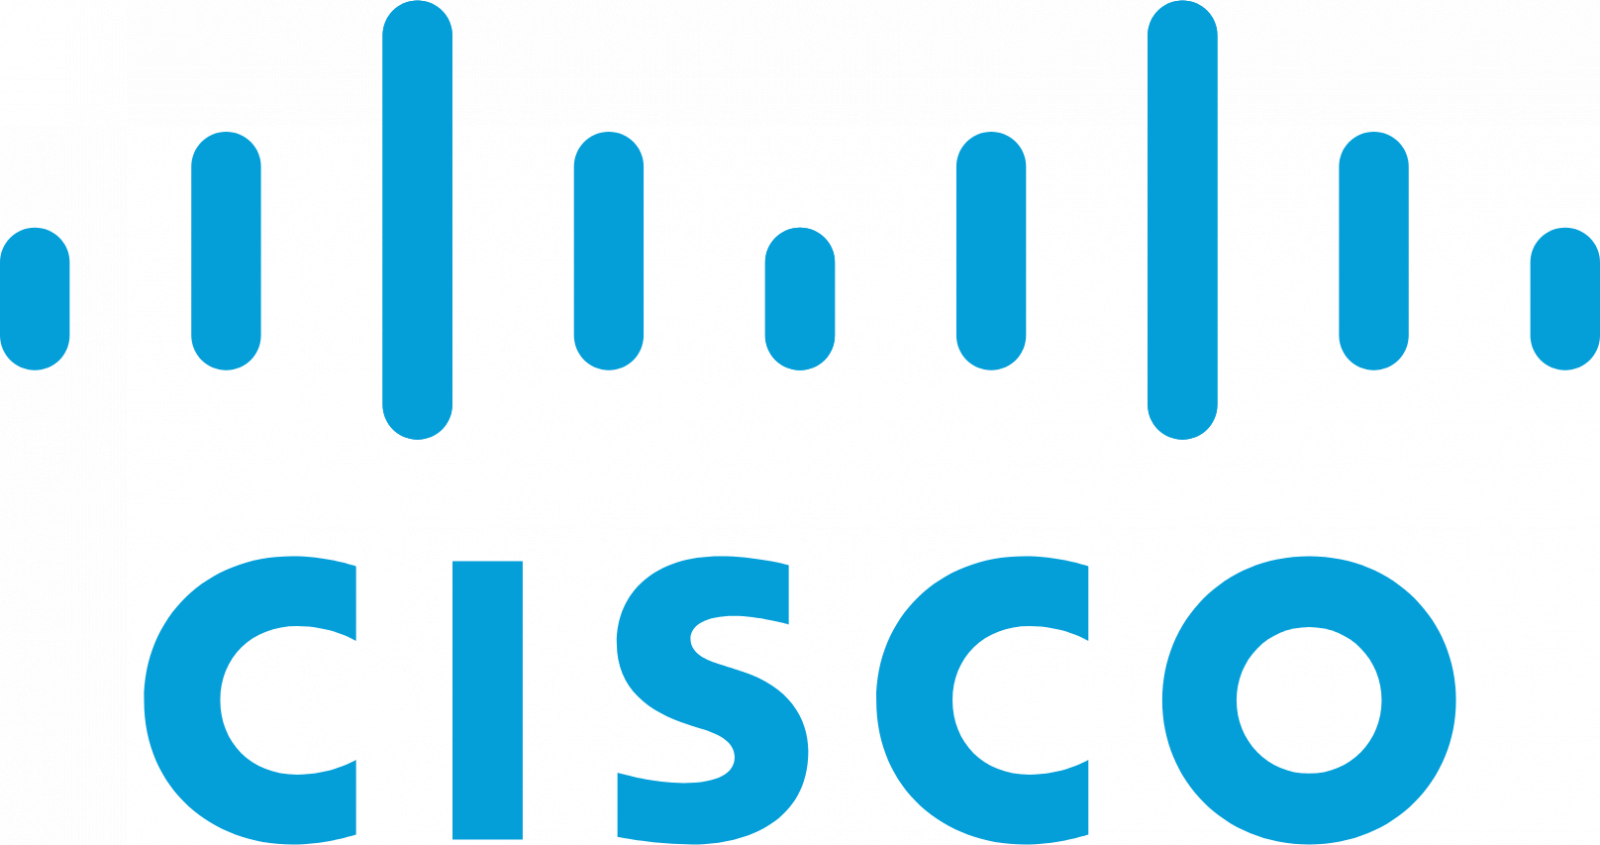 Cisco IT companies in Bangalore